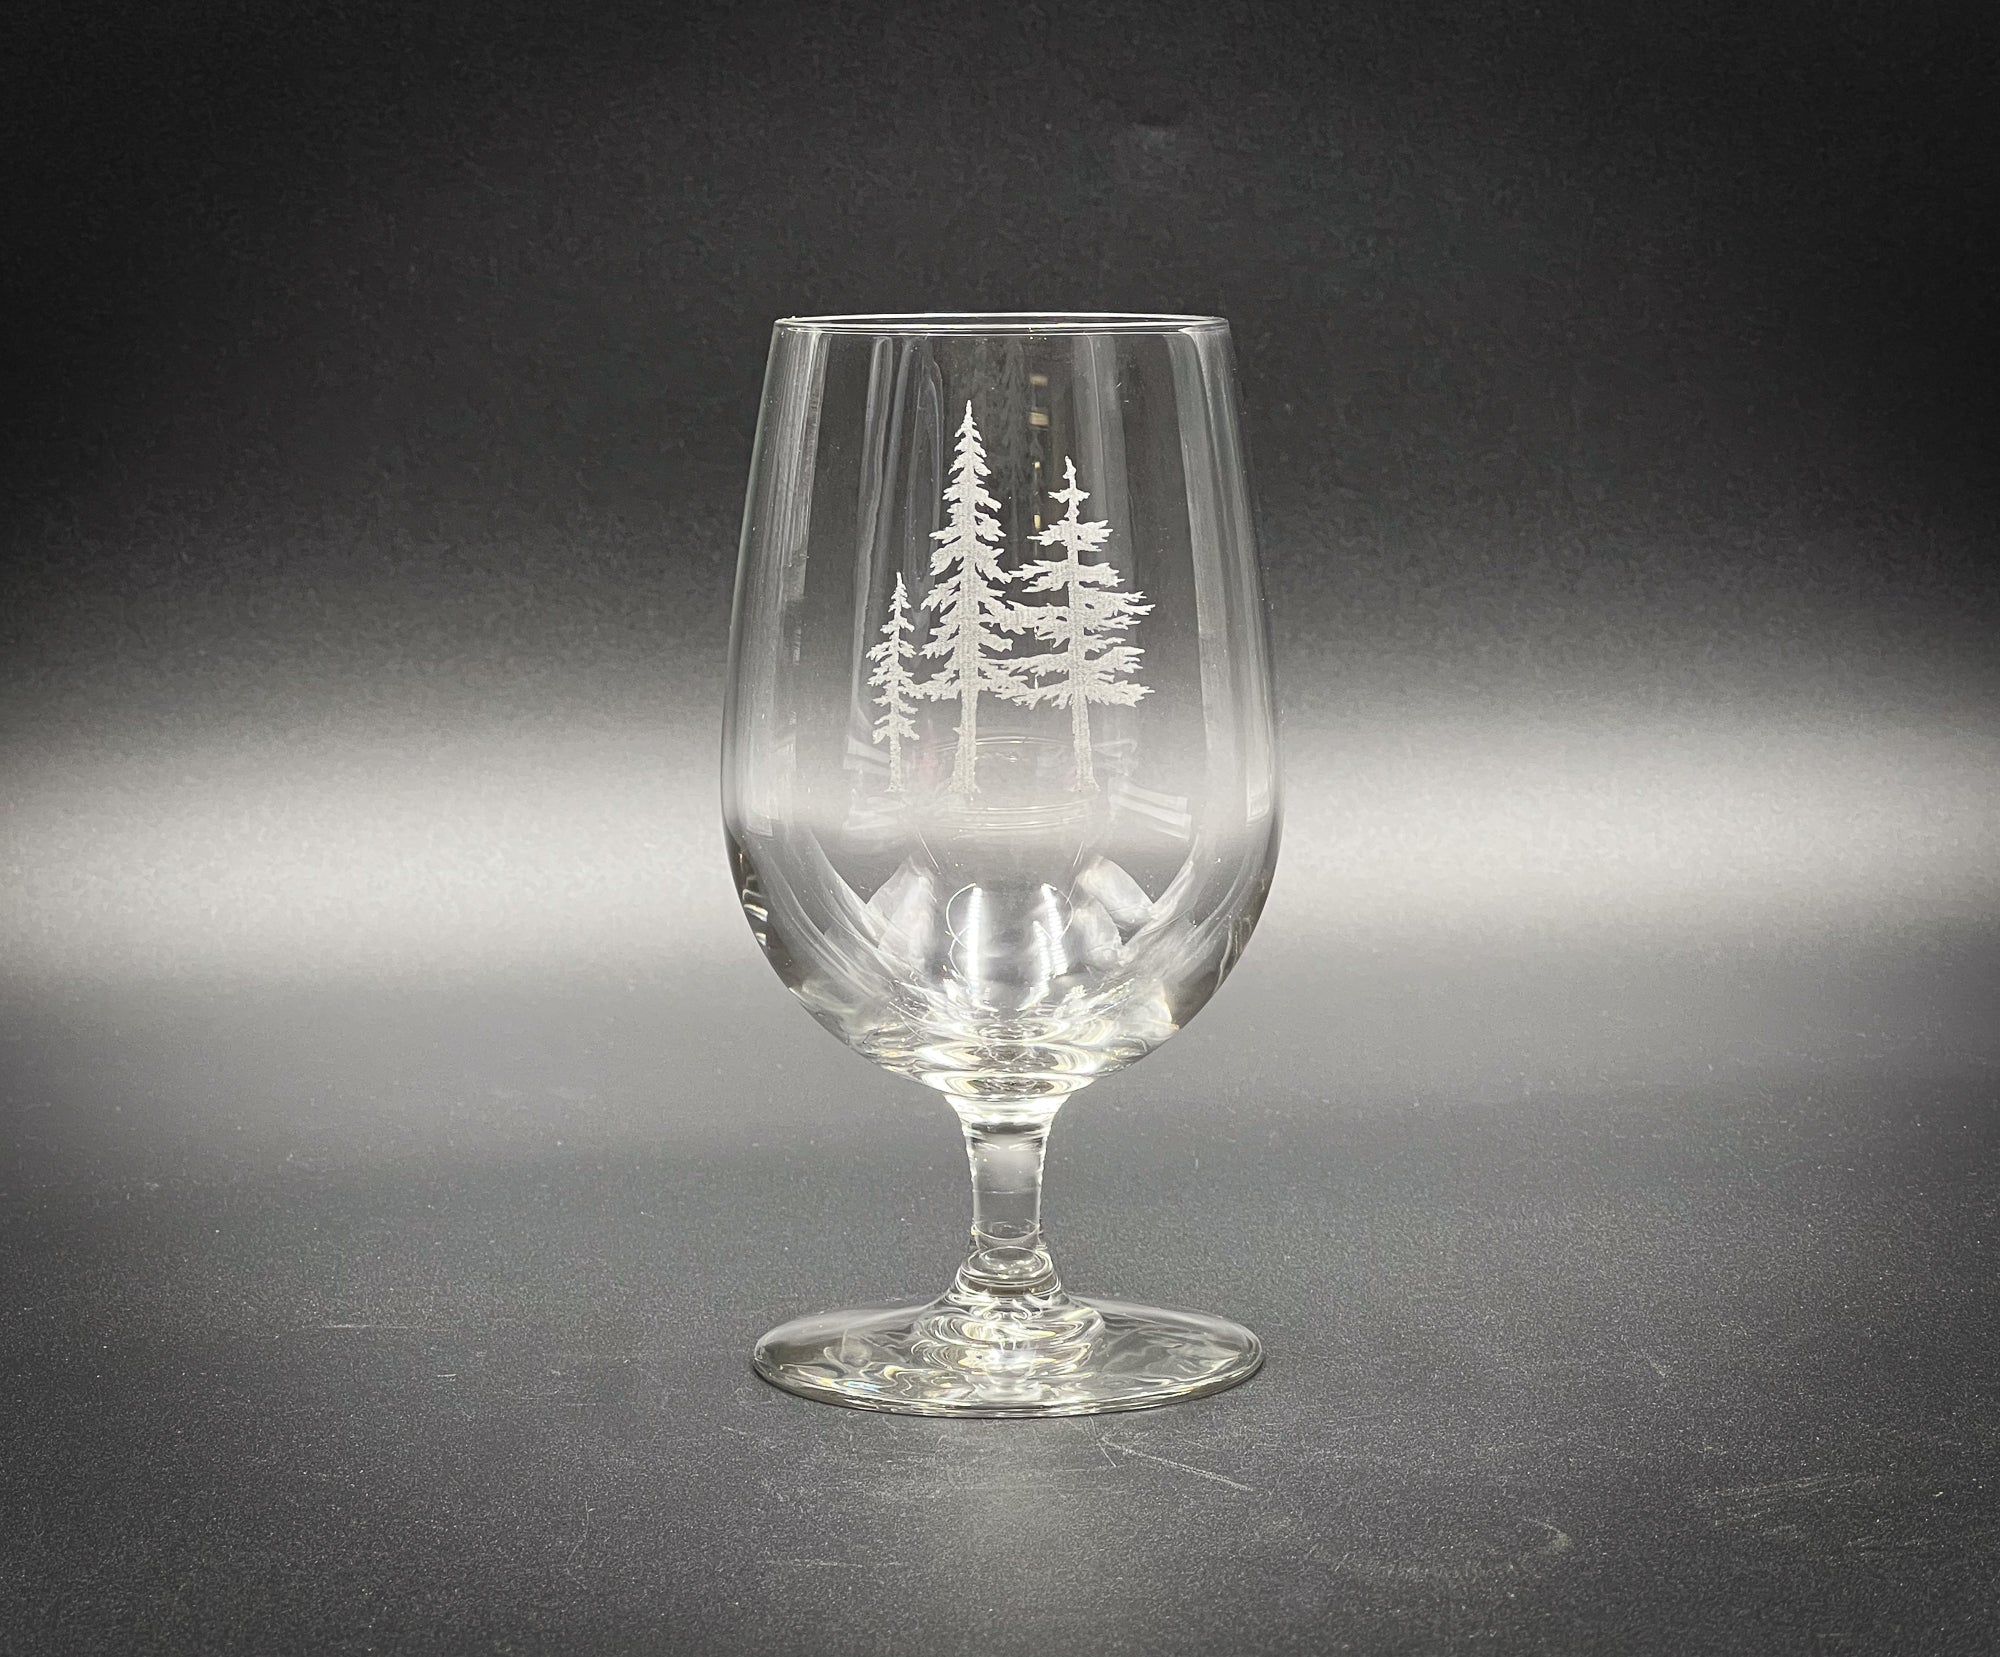 Custom Vina Tall Wine Glass - 16 oz. - Engraved - Printed School Supplies